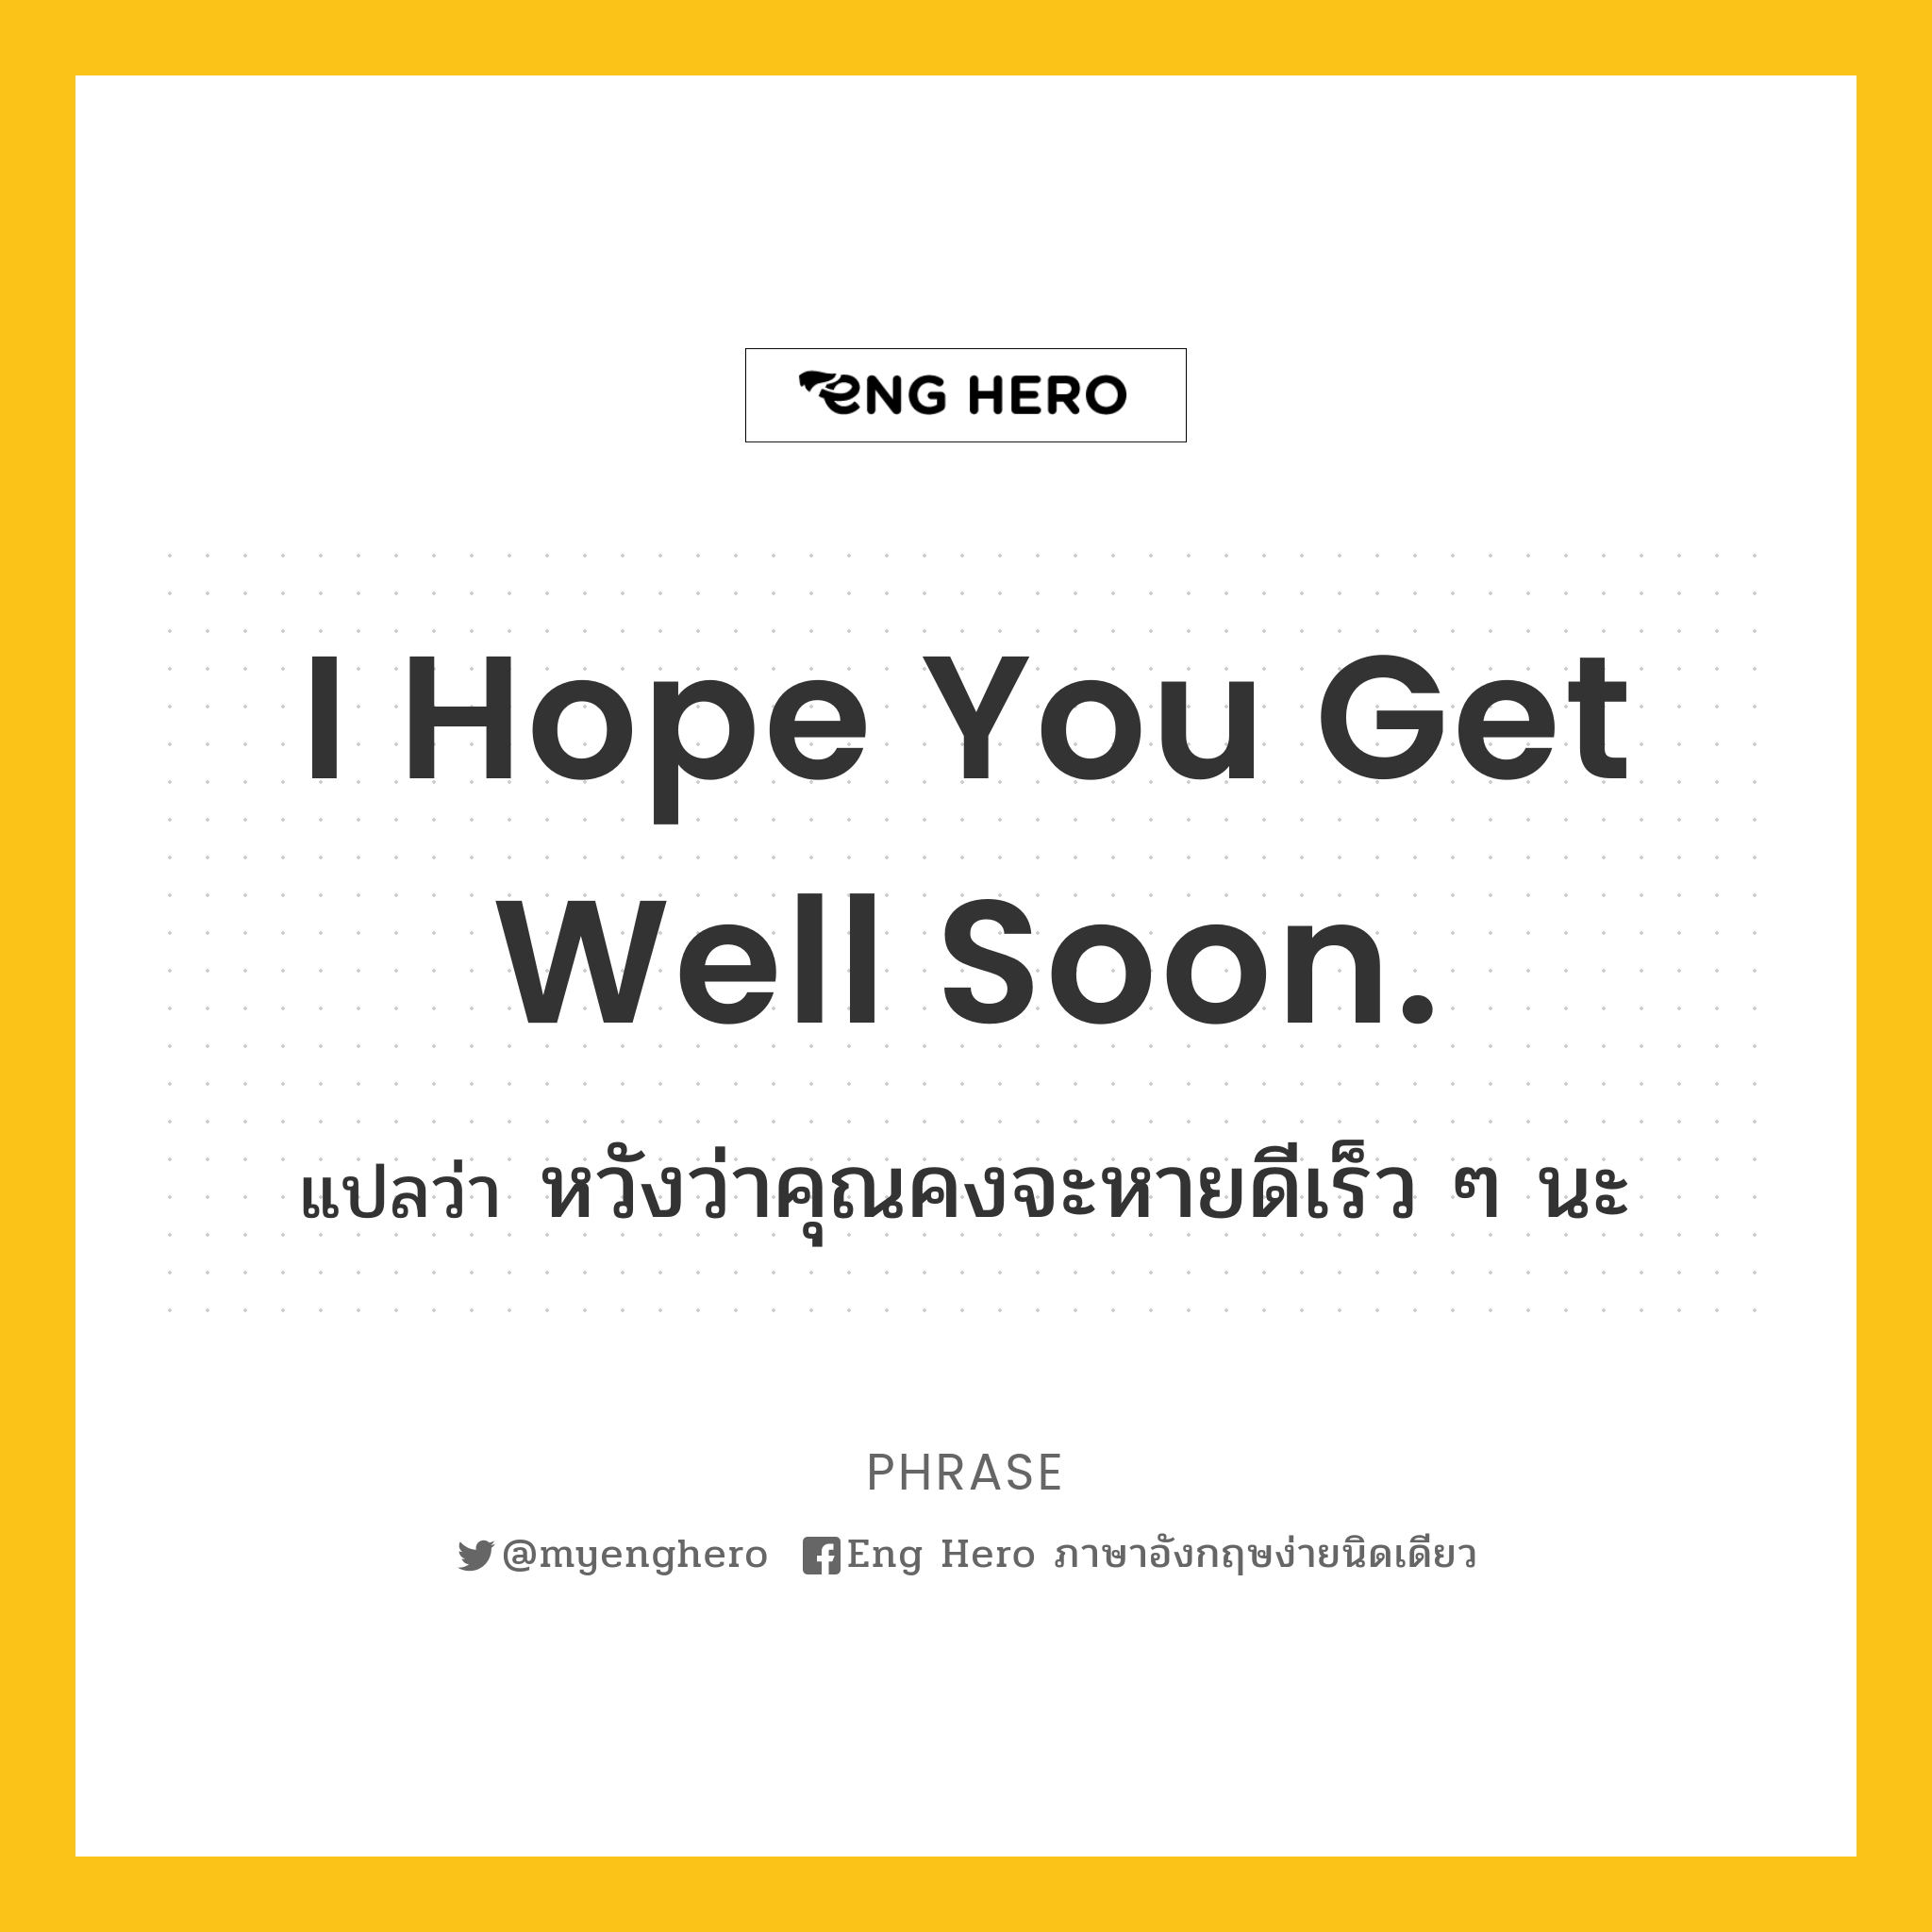 I hope you get well soon.